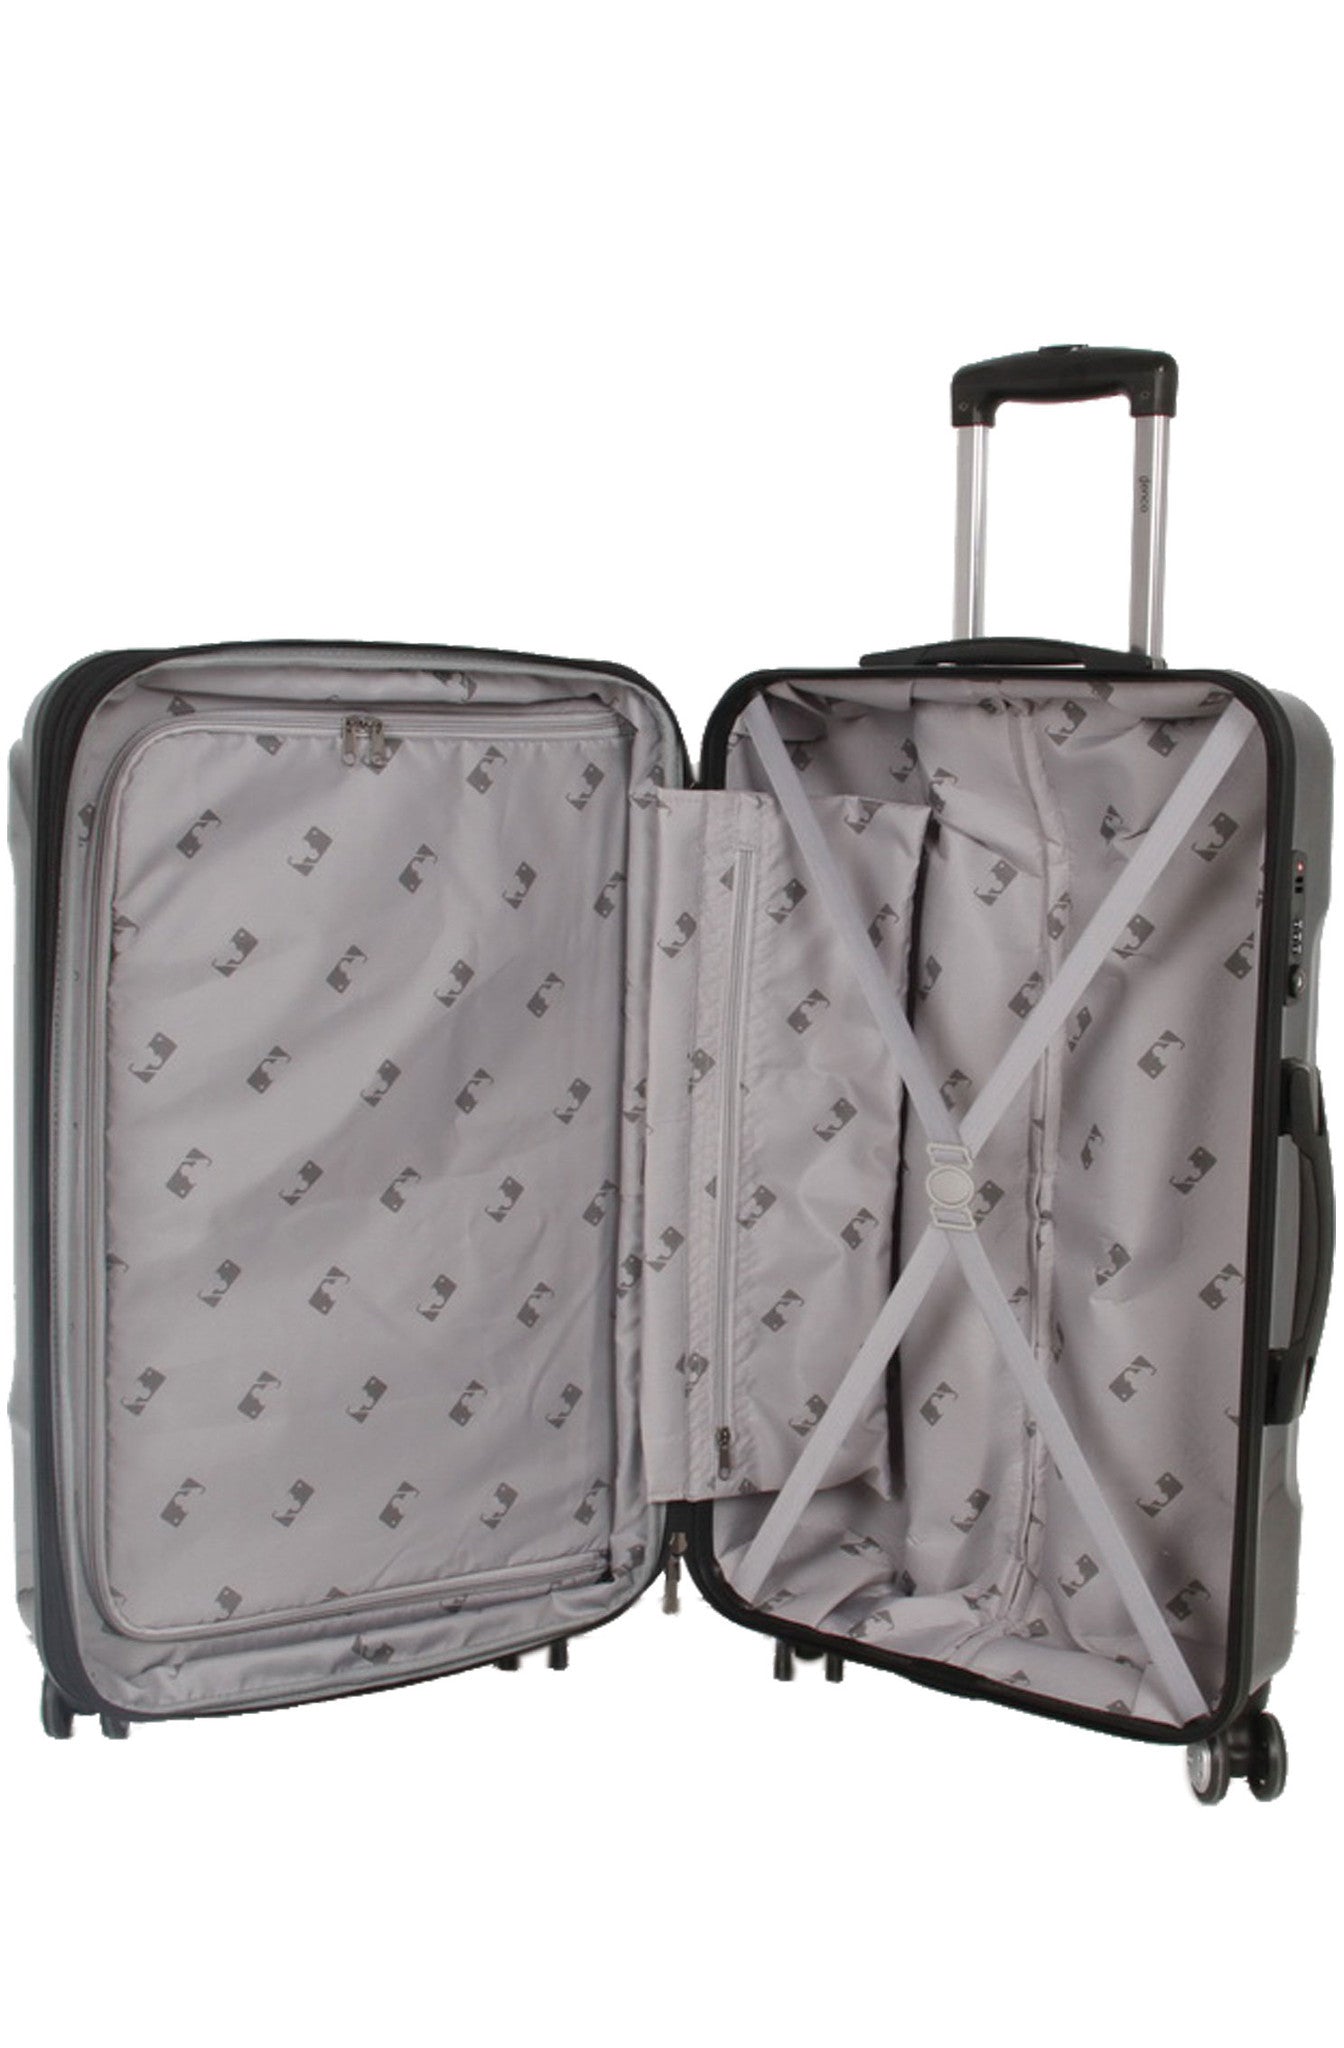 New York Yankees, 19" Premium Molded Luggage by Kaybull #NYY-19PCF - OBM Distribution, Inc.